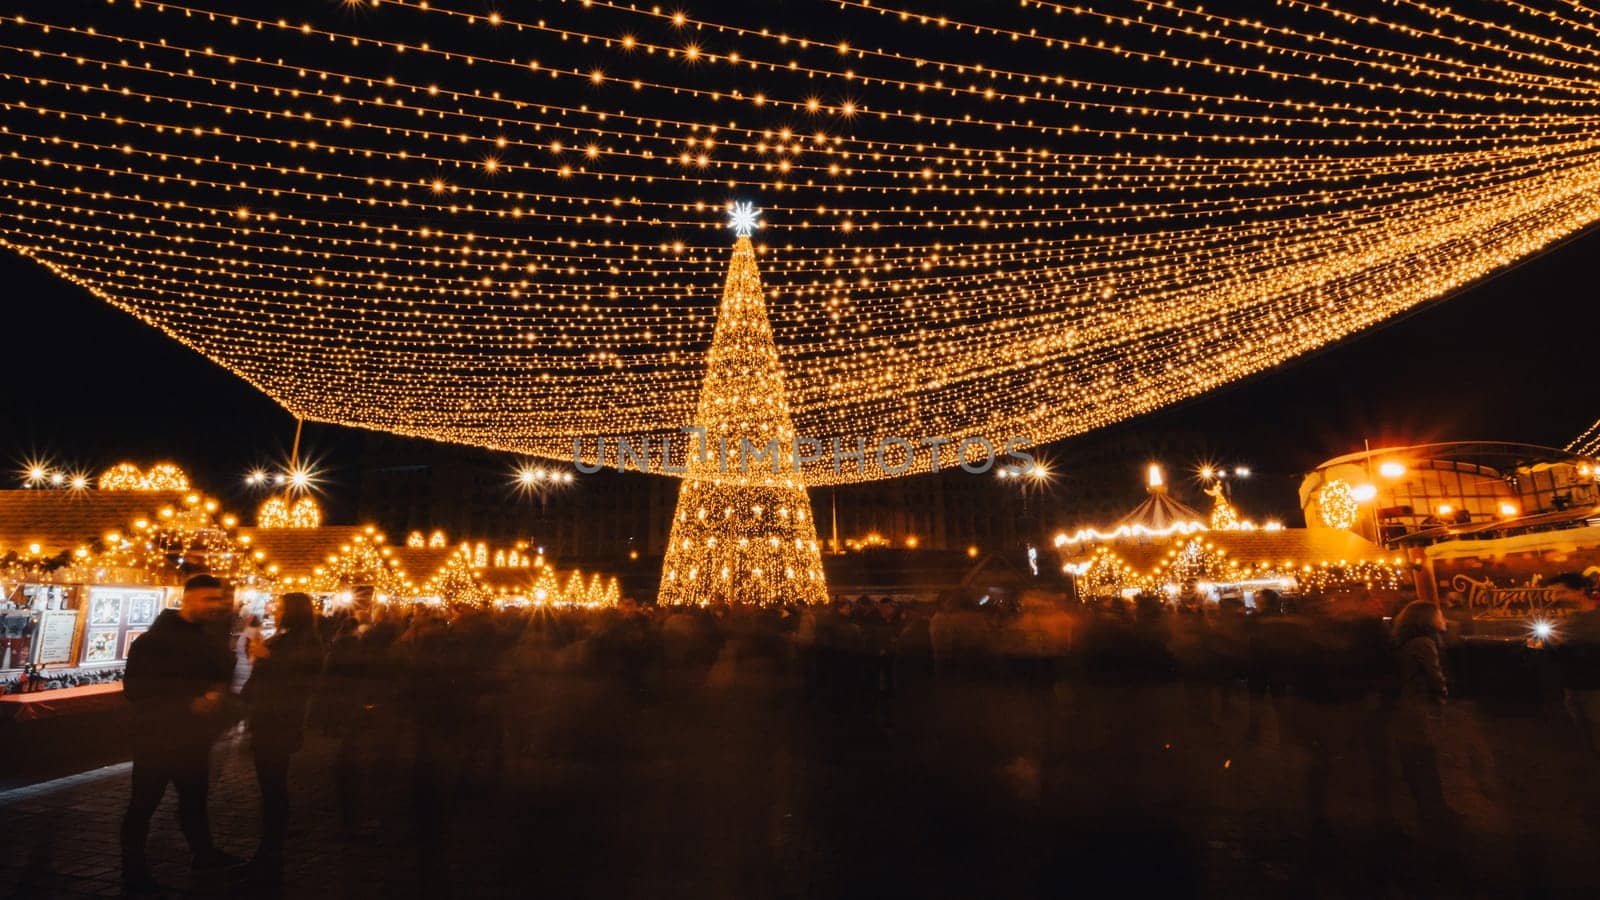 People in front of Christmas tree  by vladispas